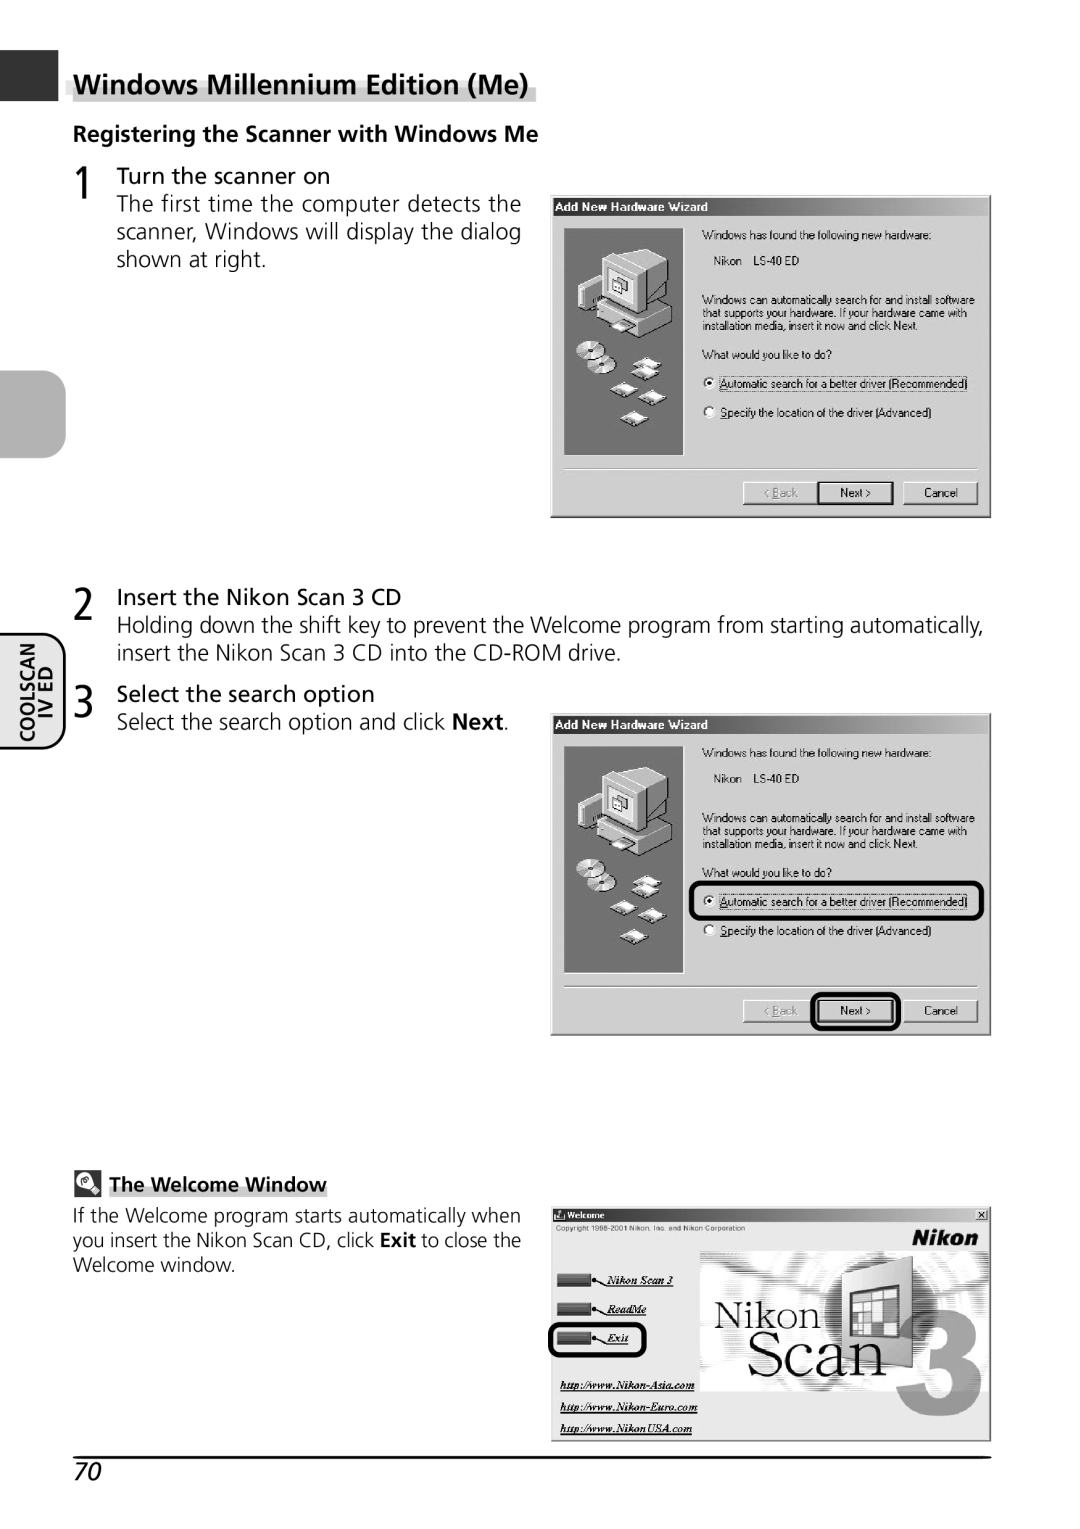 Nikon LS4000 user manual Windows Millennium Edition Me, Registering the Scanner with Windows Me 